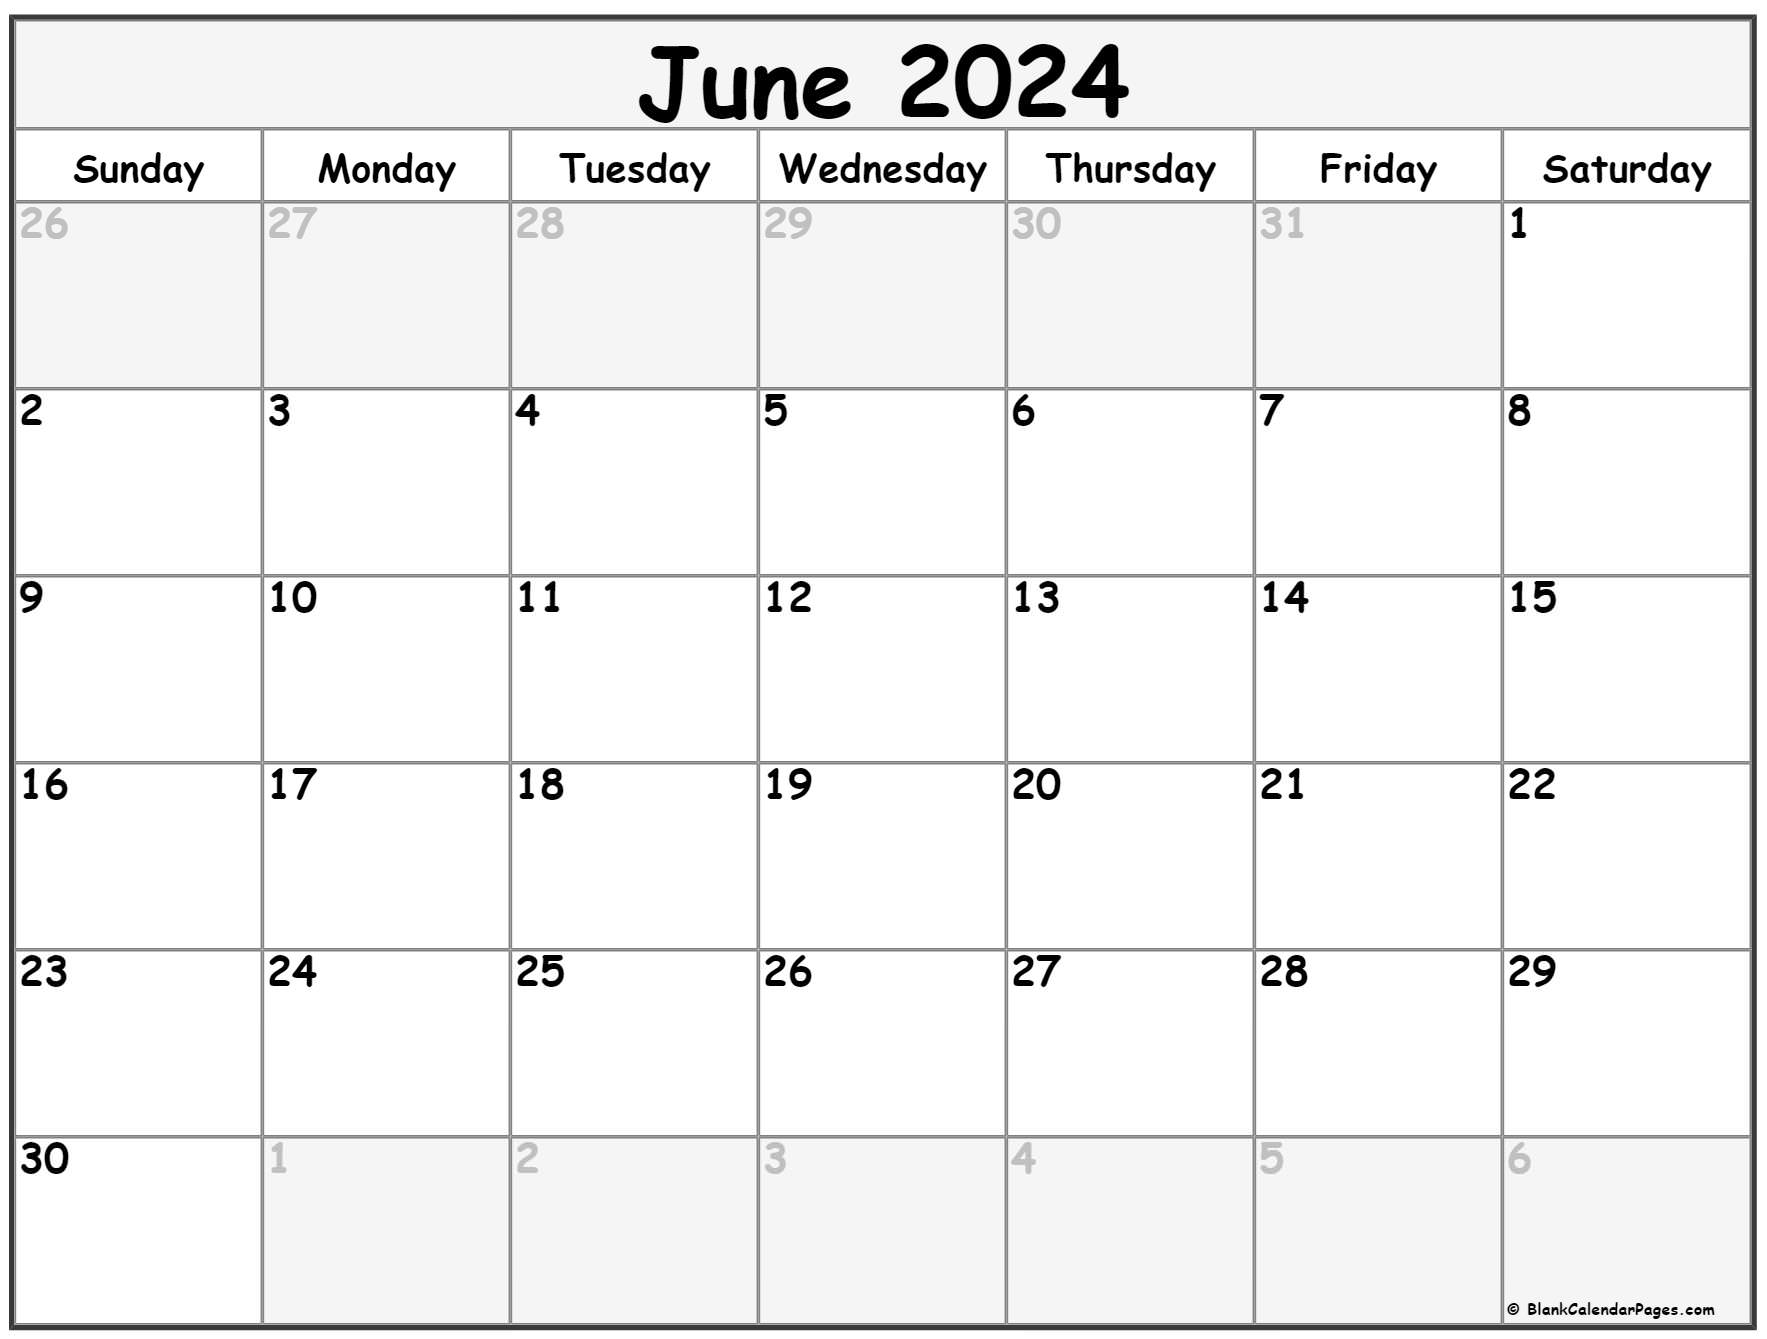 June 2024 Calendar | Free Printable Calendar for Printable Calendar For June 2024